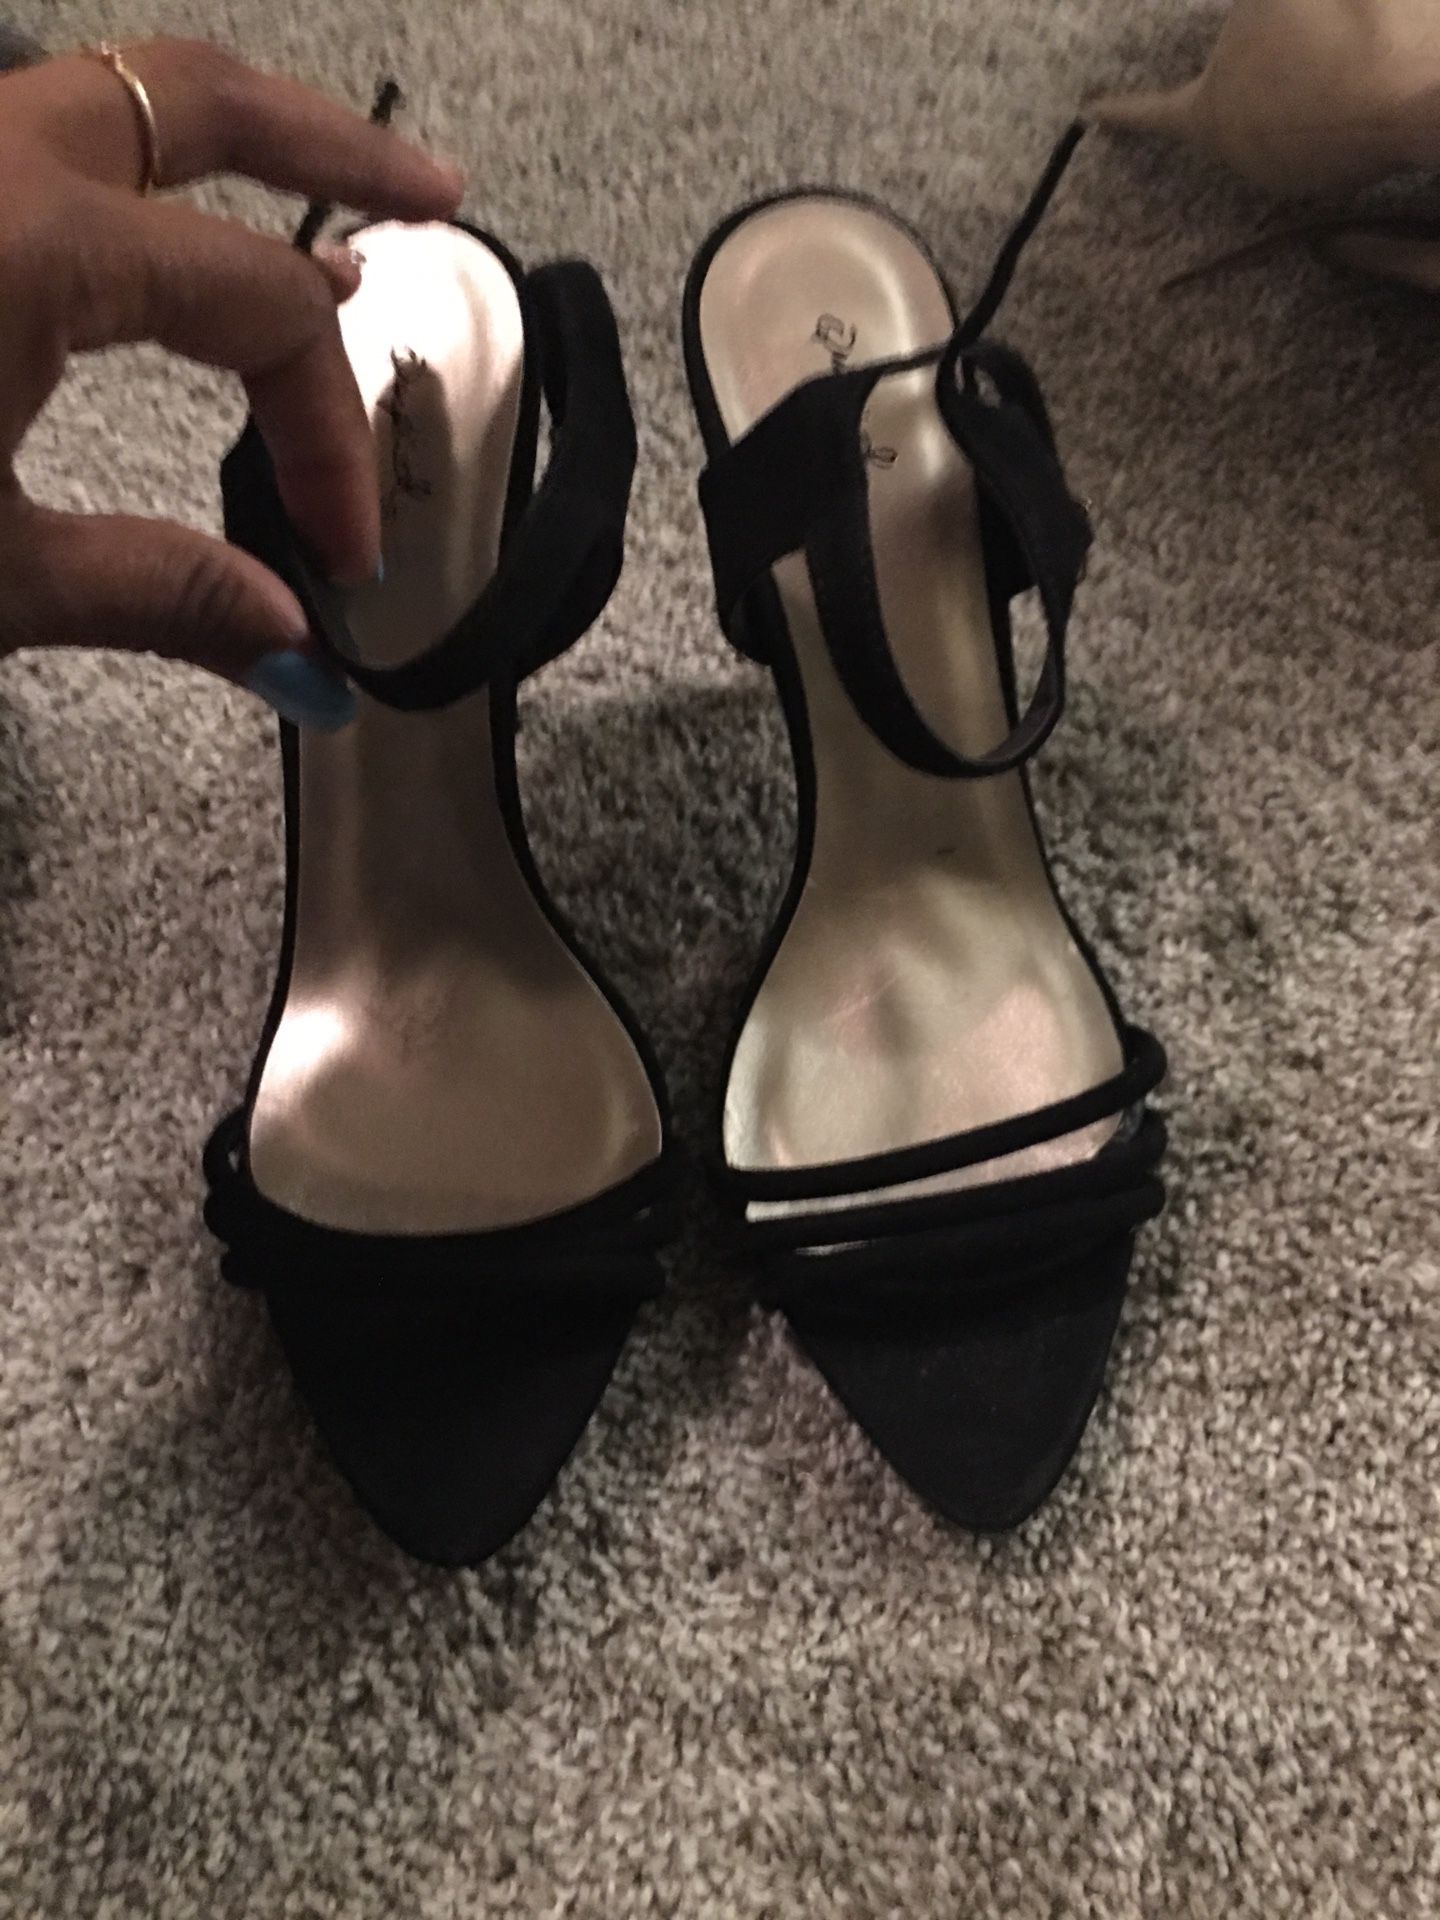 New women heels size 10